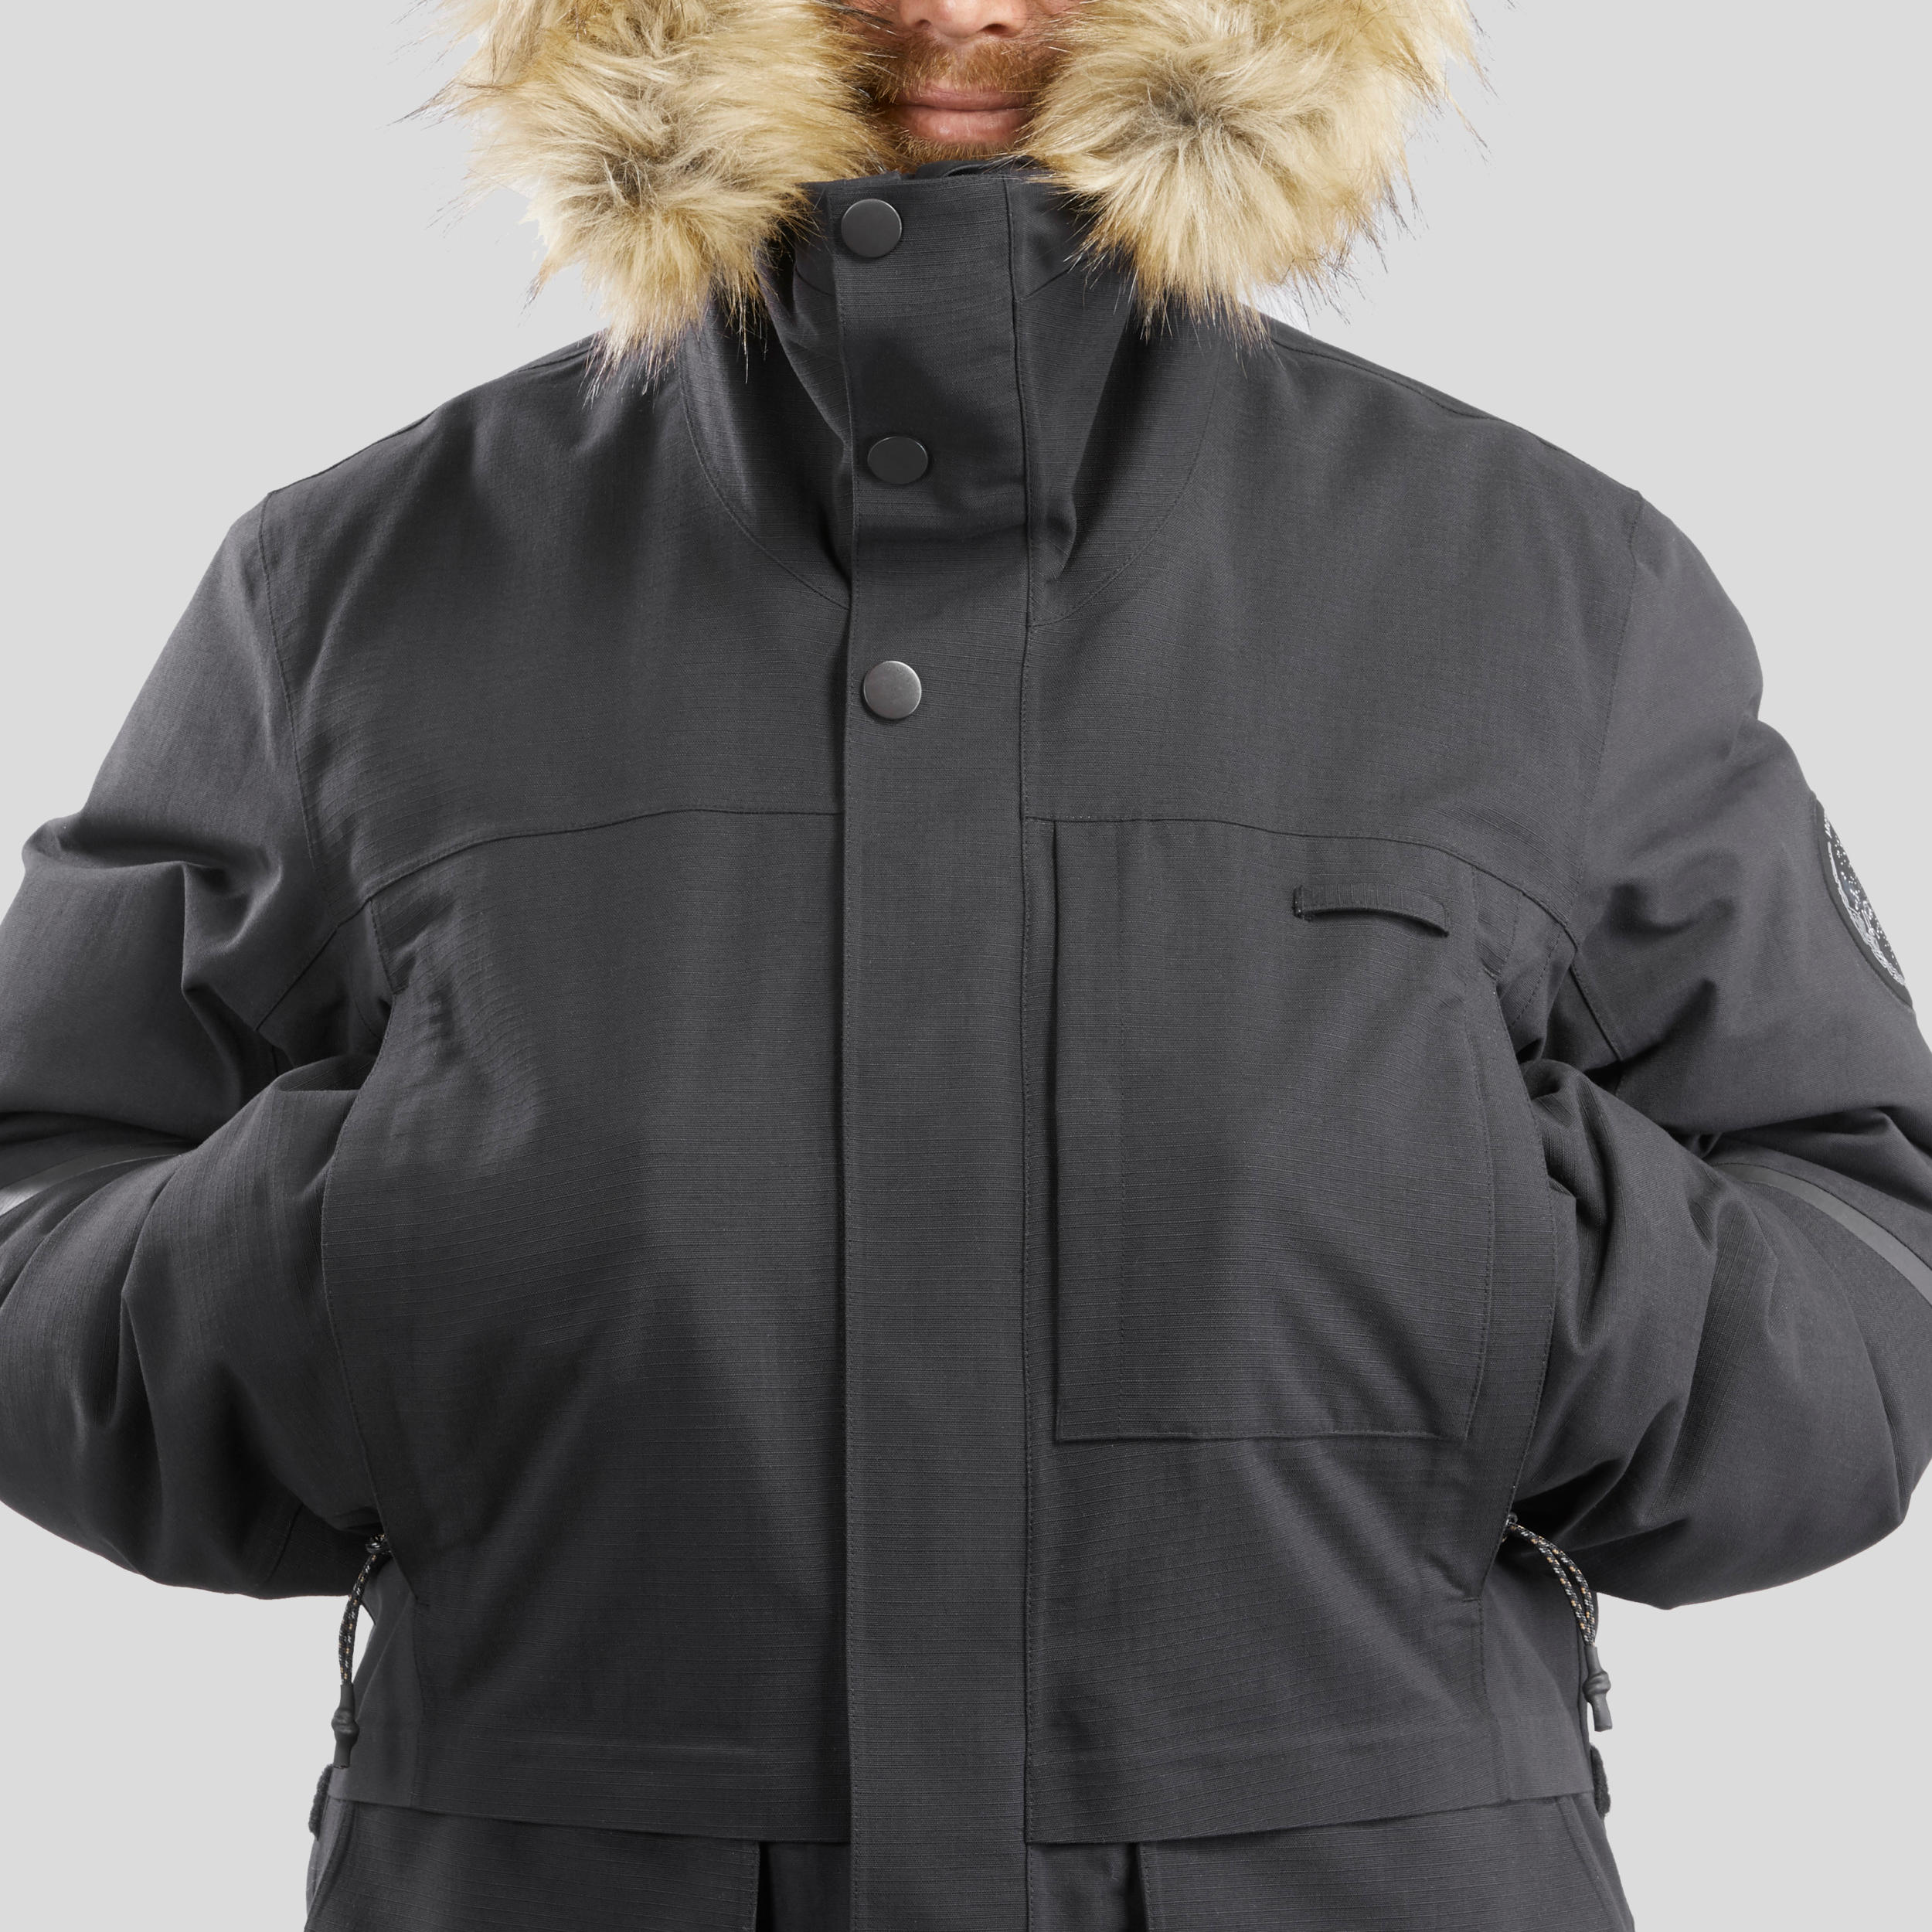 Unisex waterproof parka jacket - 900 - Black 11/21